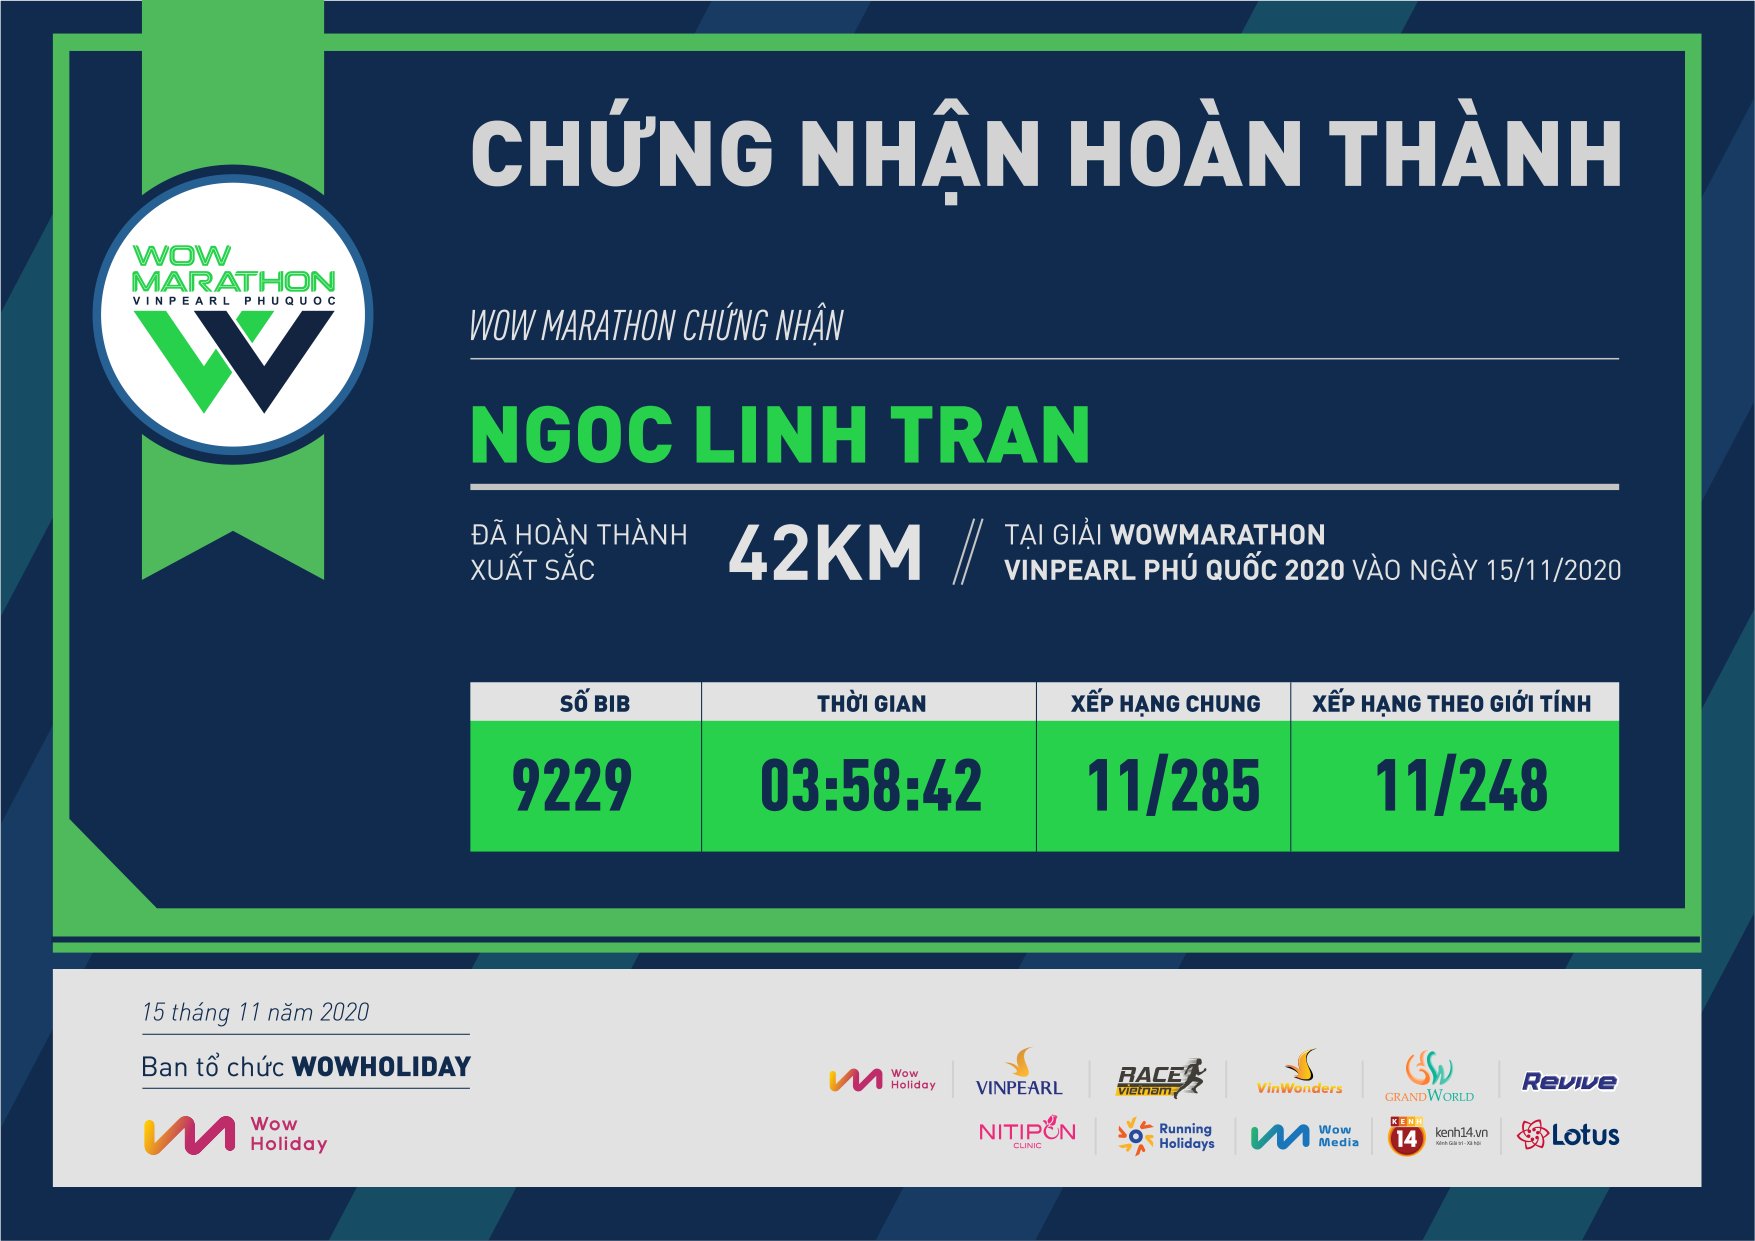 9229 - Ngoc Linh Tran